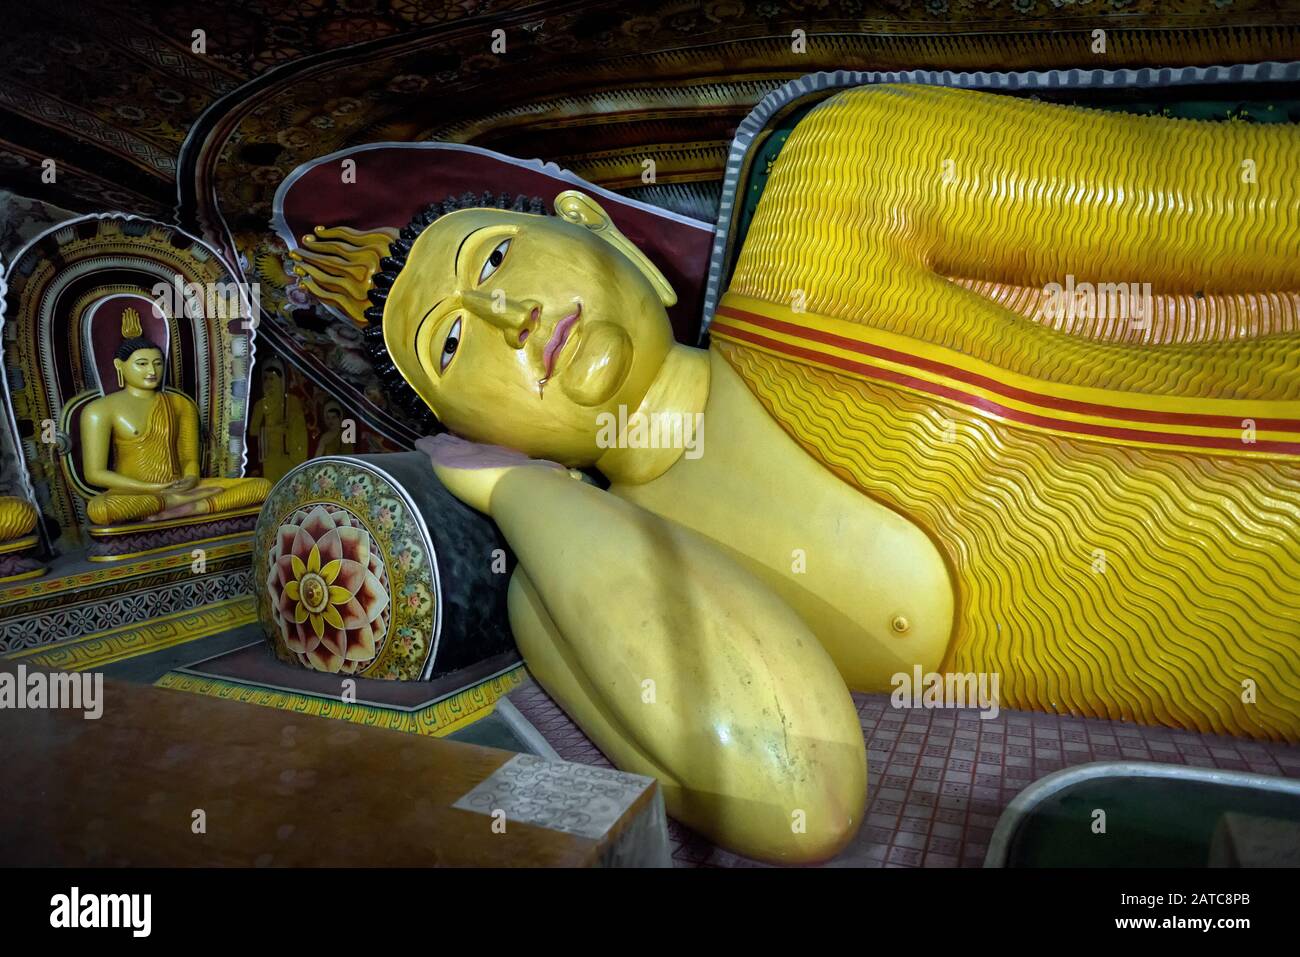 Mulkirigala, Sri Lanka - 4. November 2017: Statue des sich zurückverrückenden Buddha im alten buddhistischen Höhlentempel - Mulkigala Raja Maha Vihara. Stockfoto